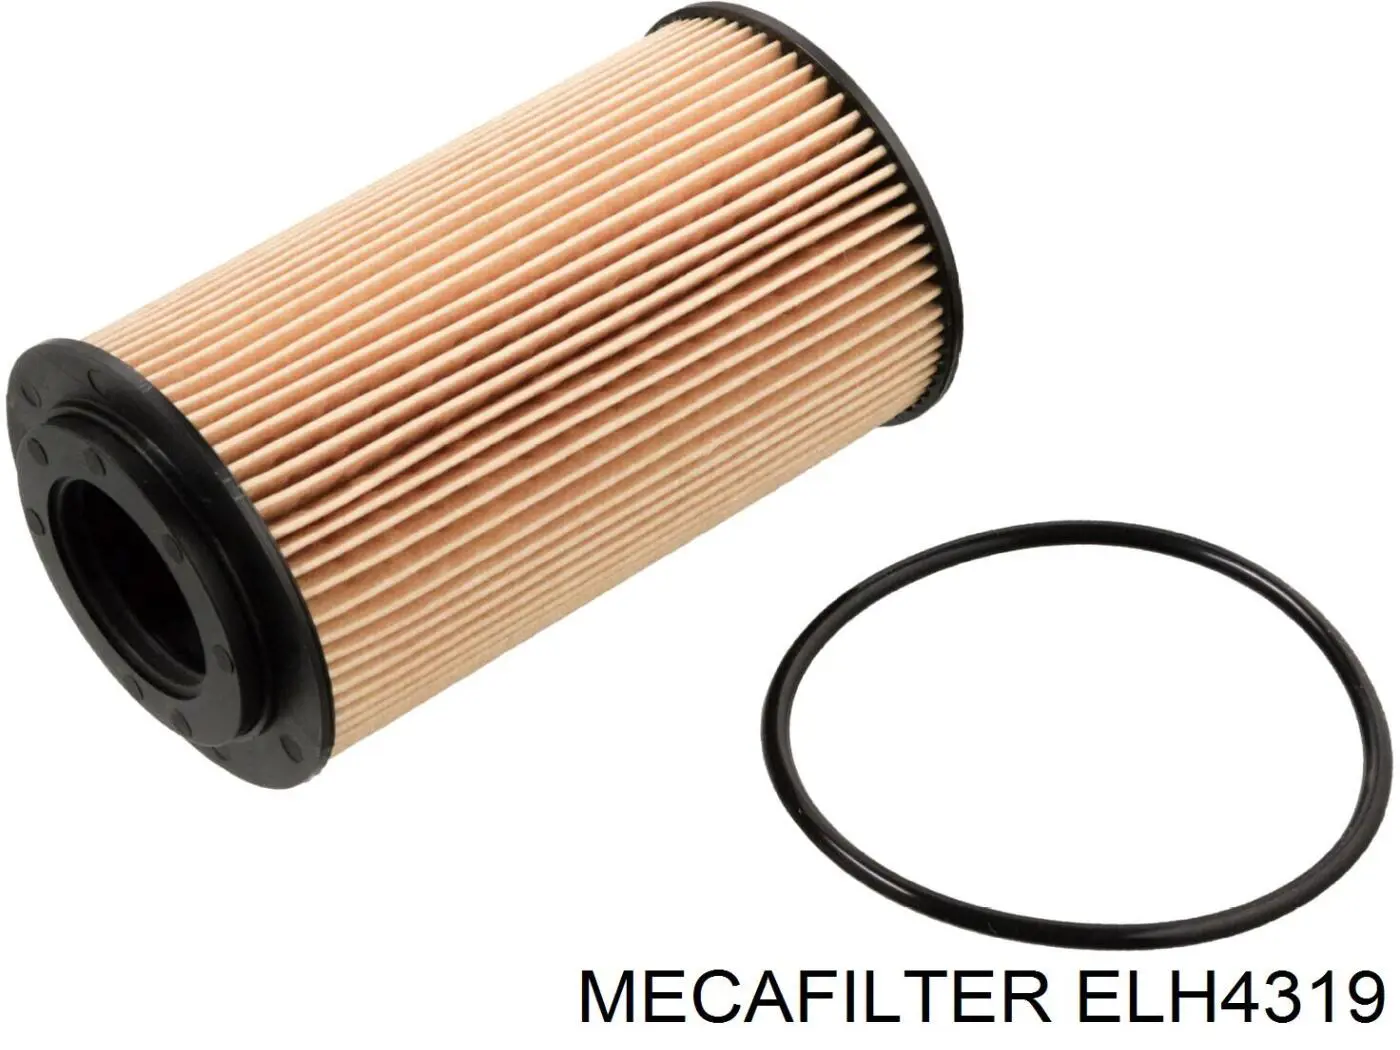 Filtro de aceite ELH4319 Mecafilter